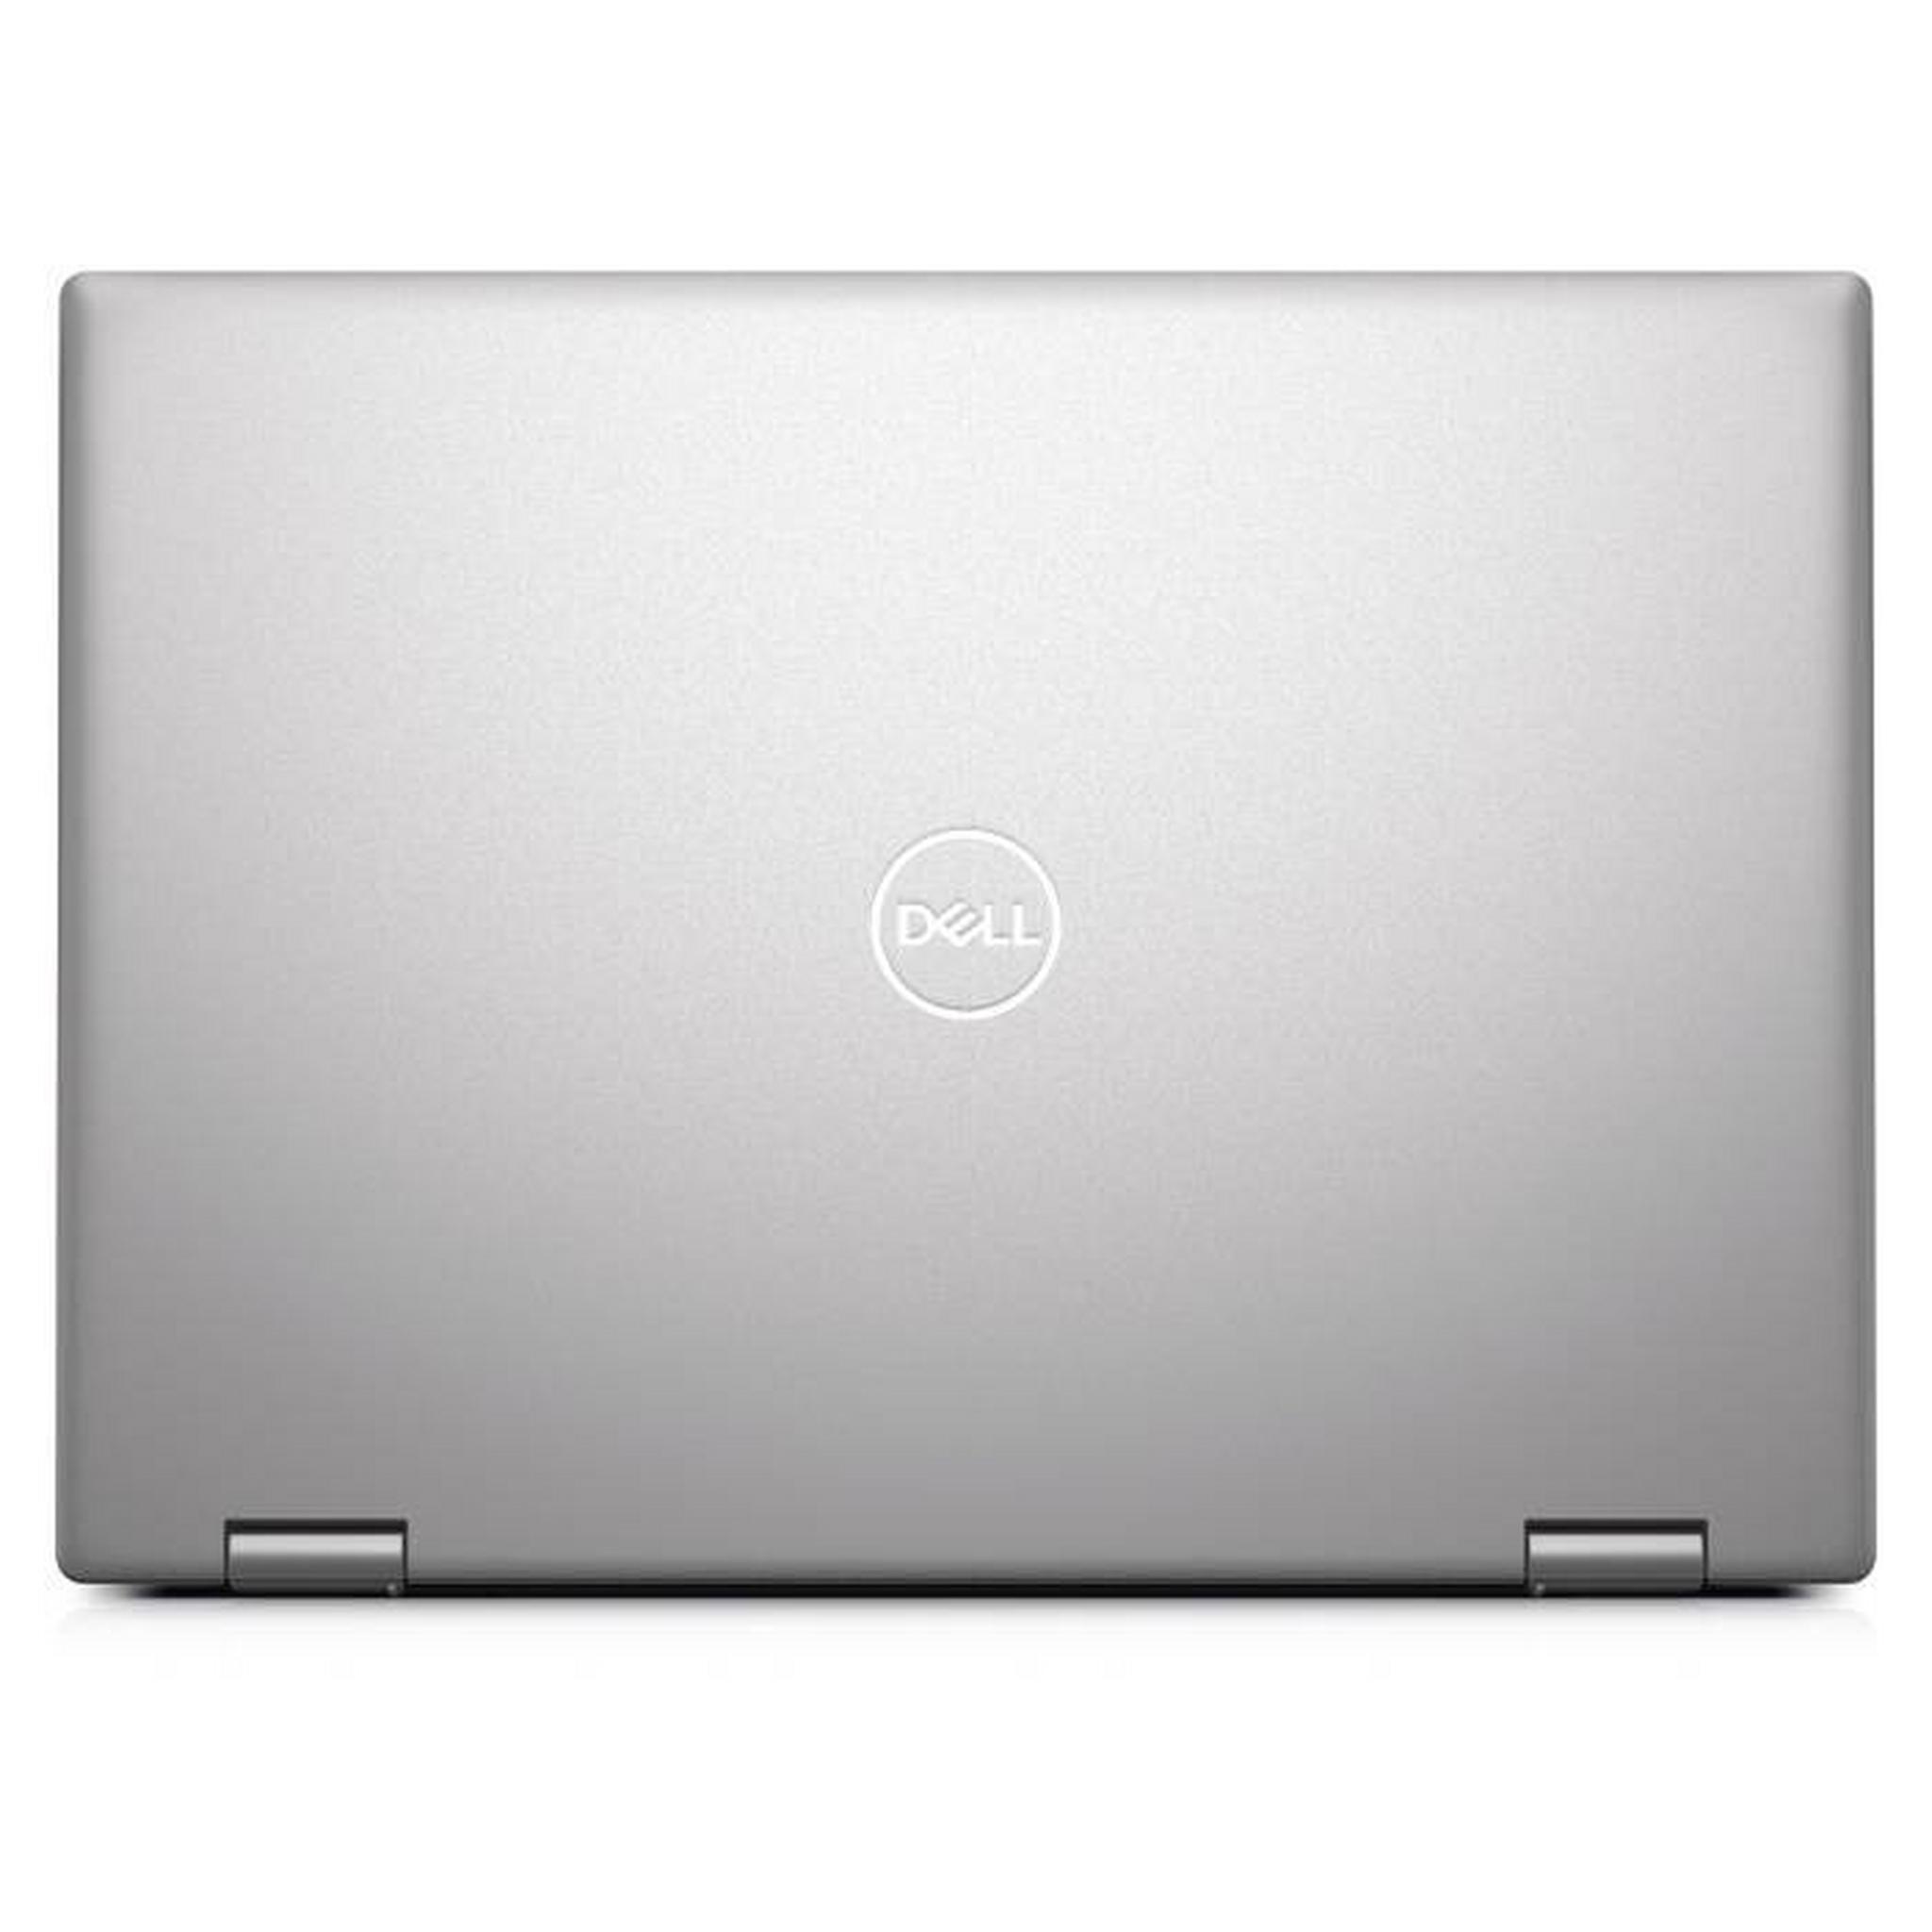 Dell Inspiron 14 Convertible Laptop, Intel Core i5 12th Gen, 8GB RAM, 256 GB SSD, 14-inch, Windows 11, Intel UHD graphics, 7420-INS-5009 - Sliver